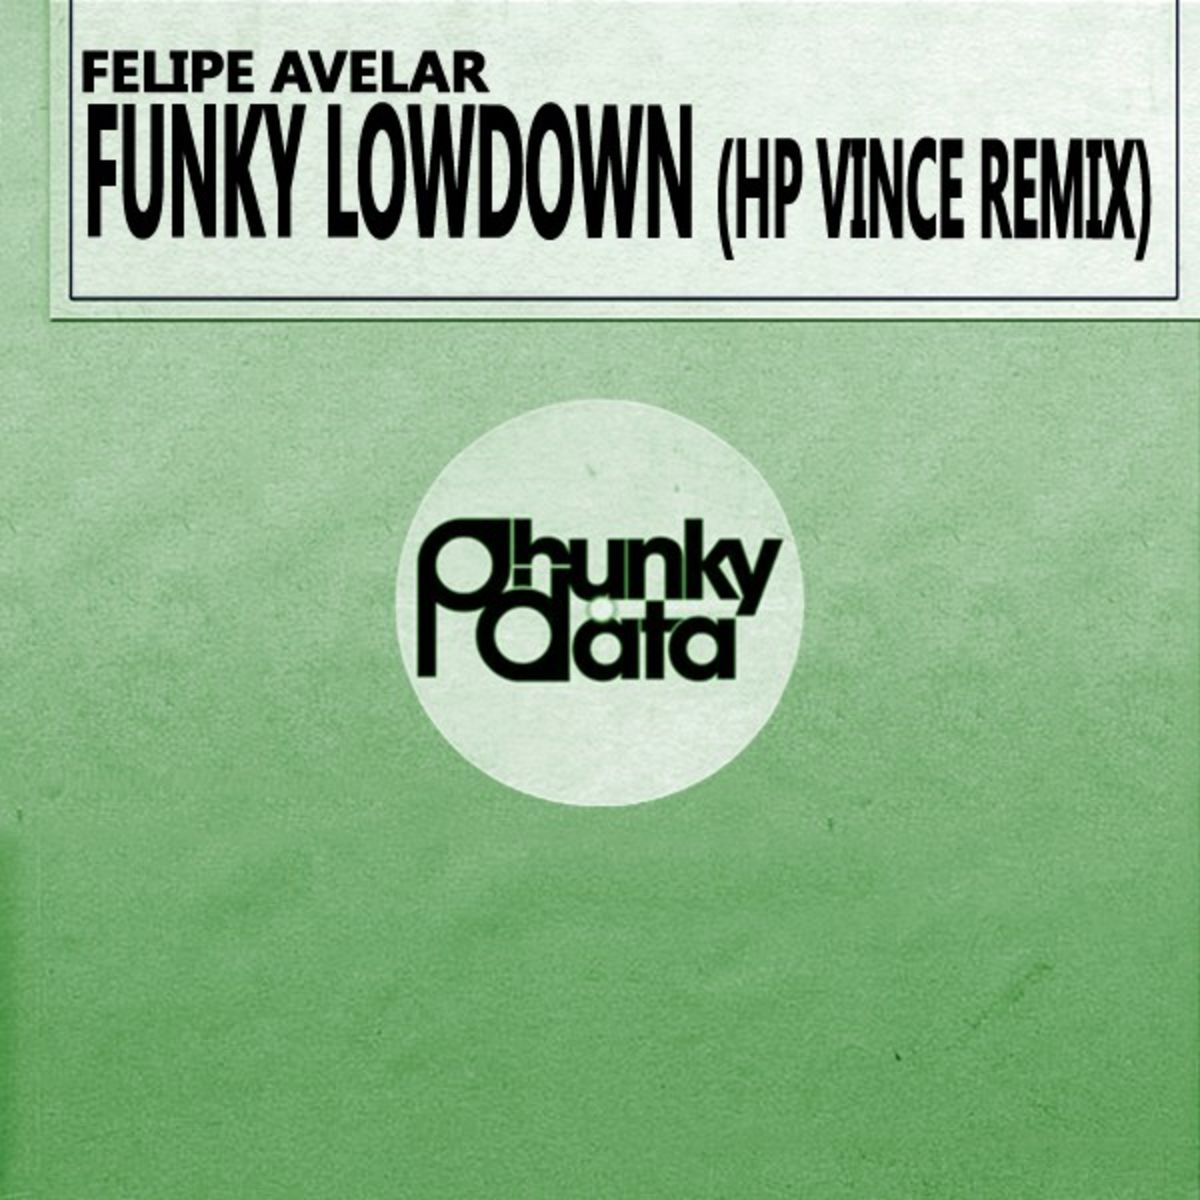 Felipe Avelar - Funky Lowdown (Hp Vince Remix) / Phunky Data